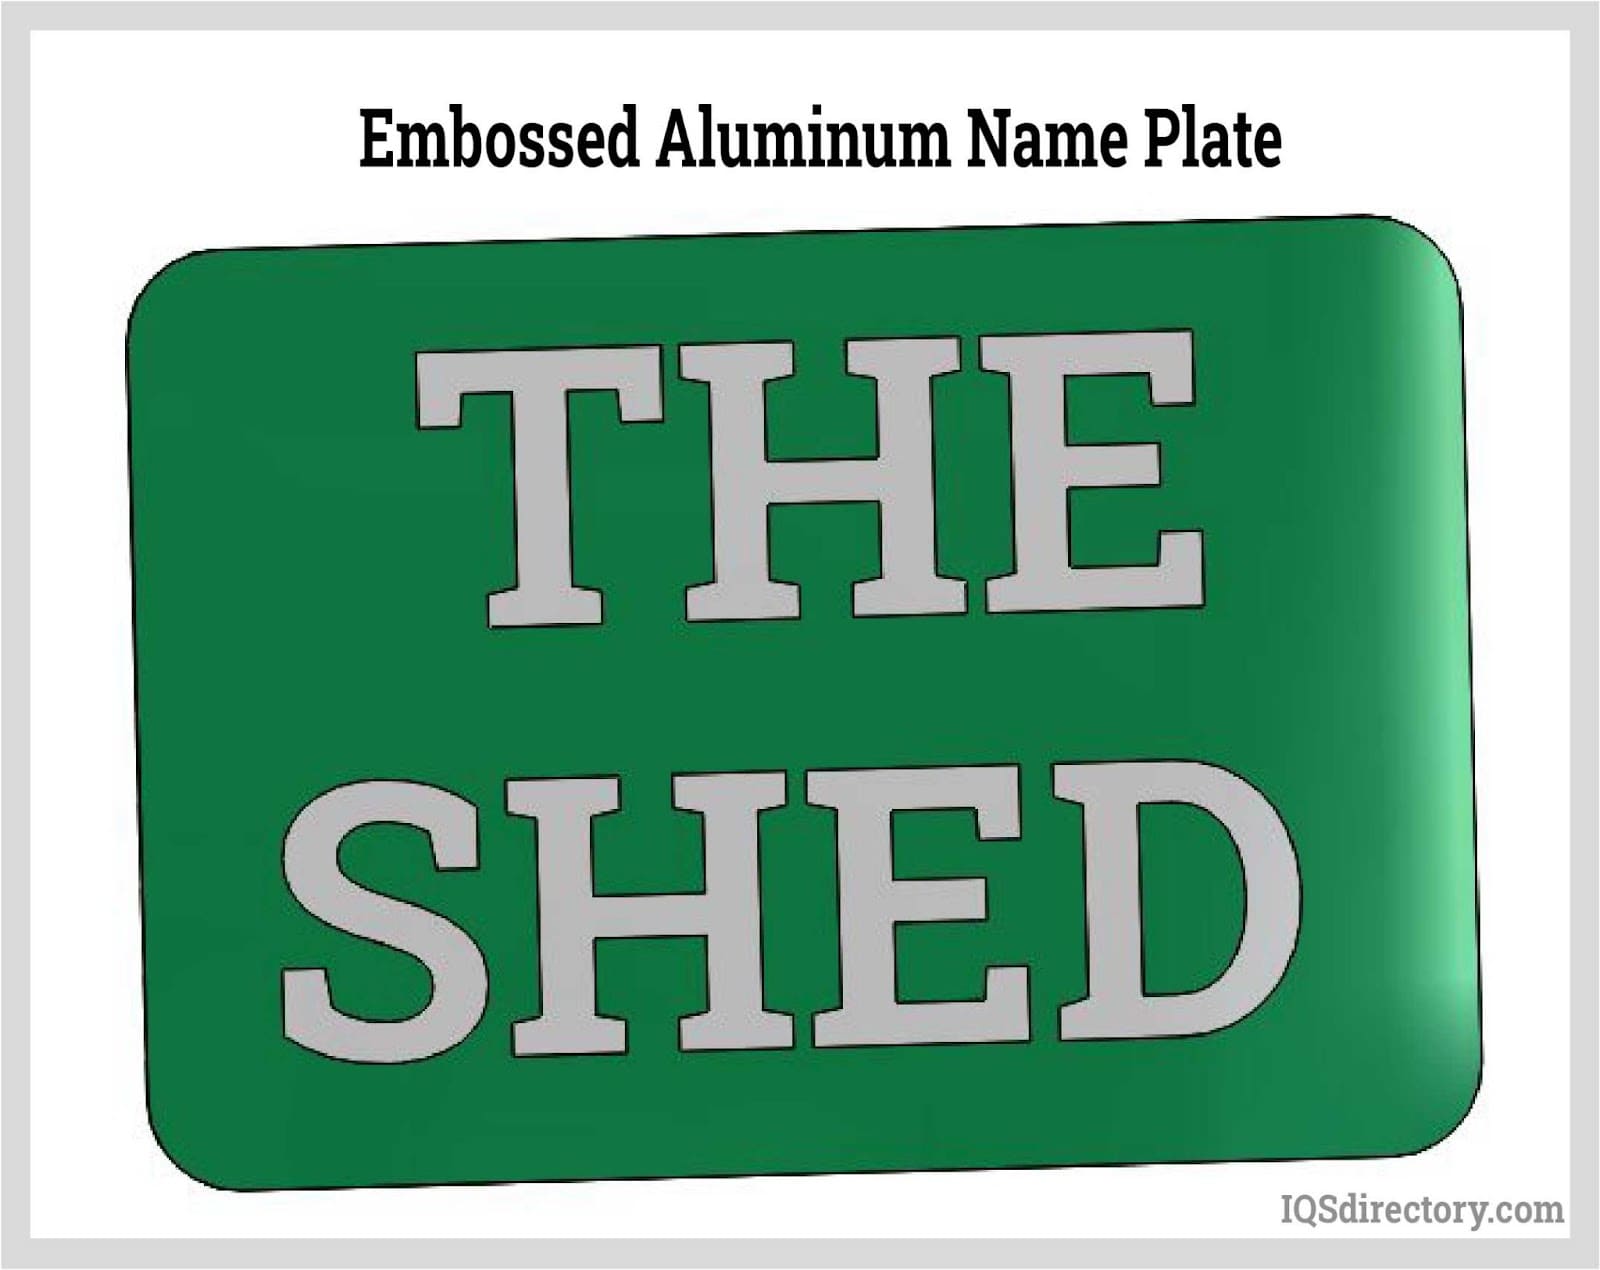 Embossed Aluminum Name Plate